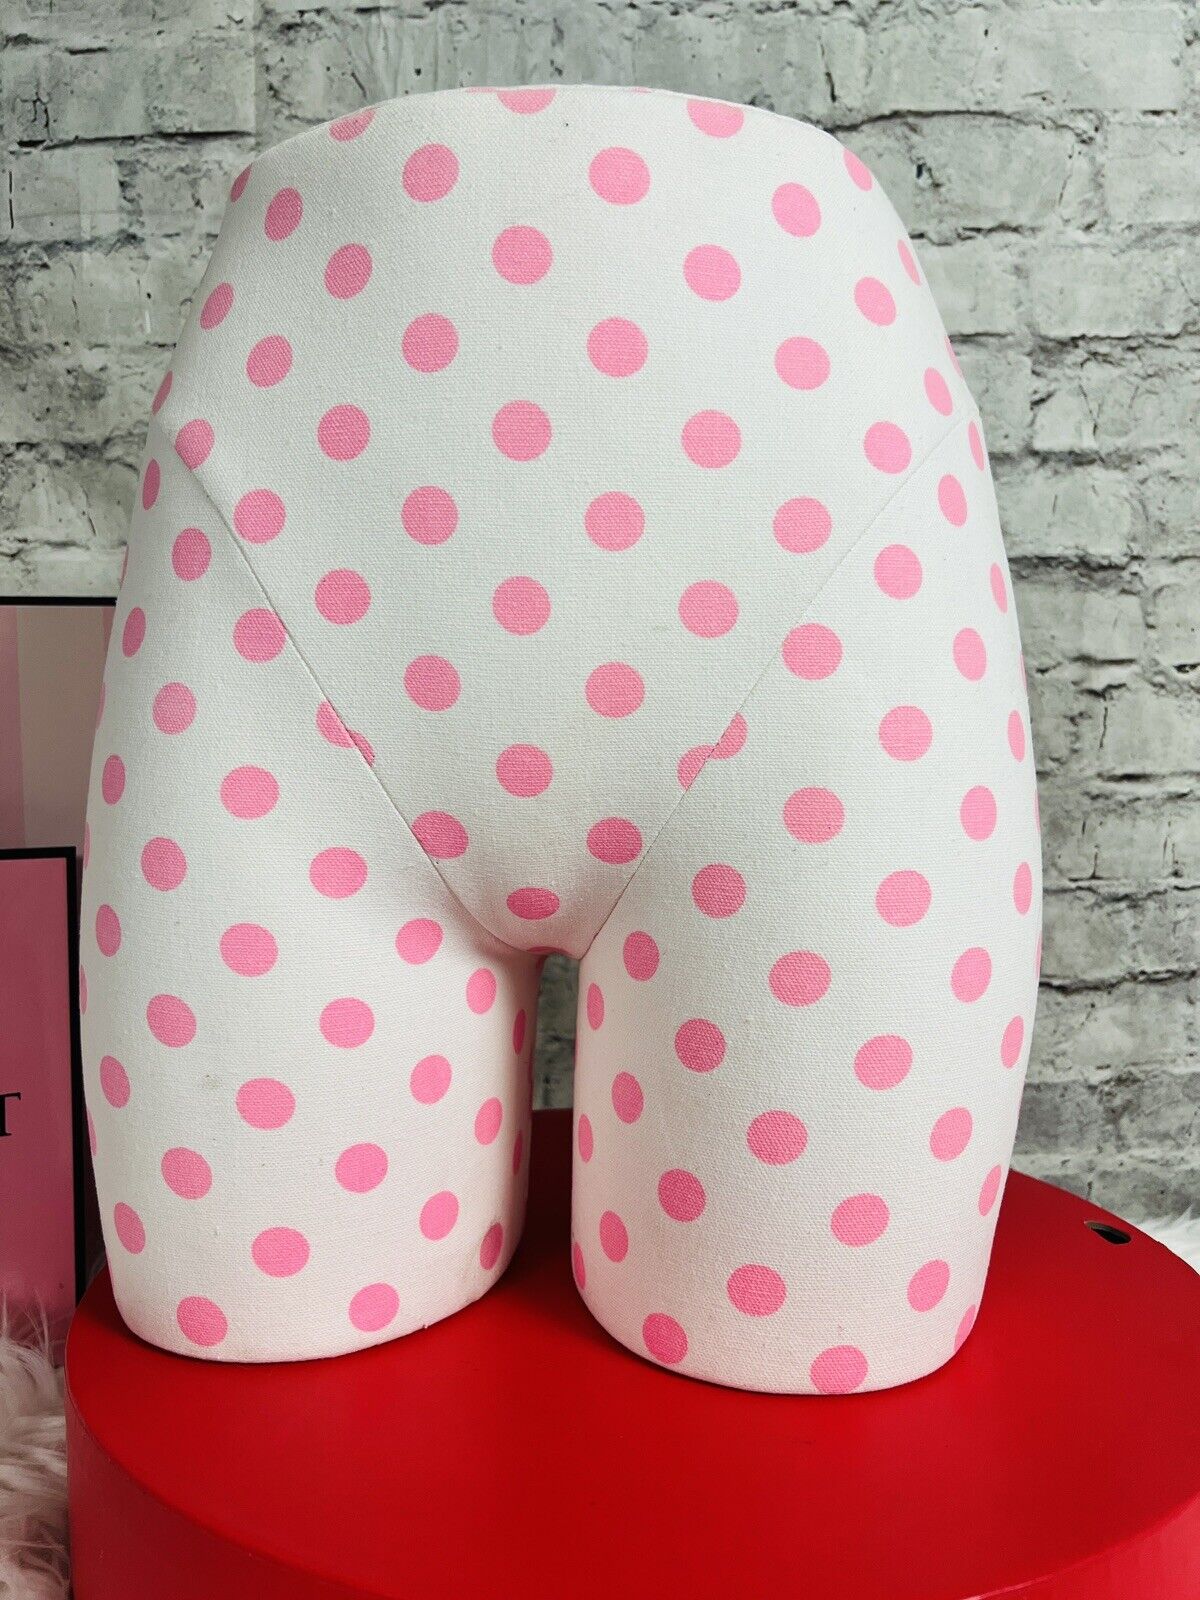 Victorias Secret PINK Store Display FORM Polka Dots Torso Mannequin RARE